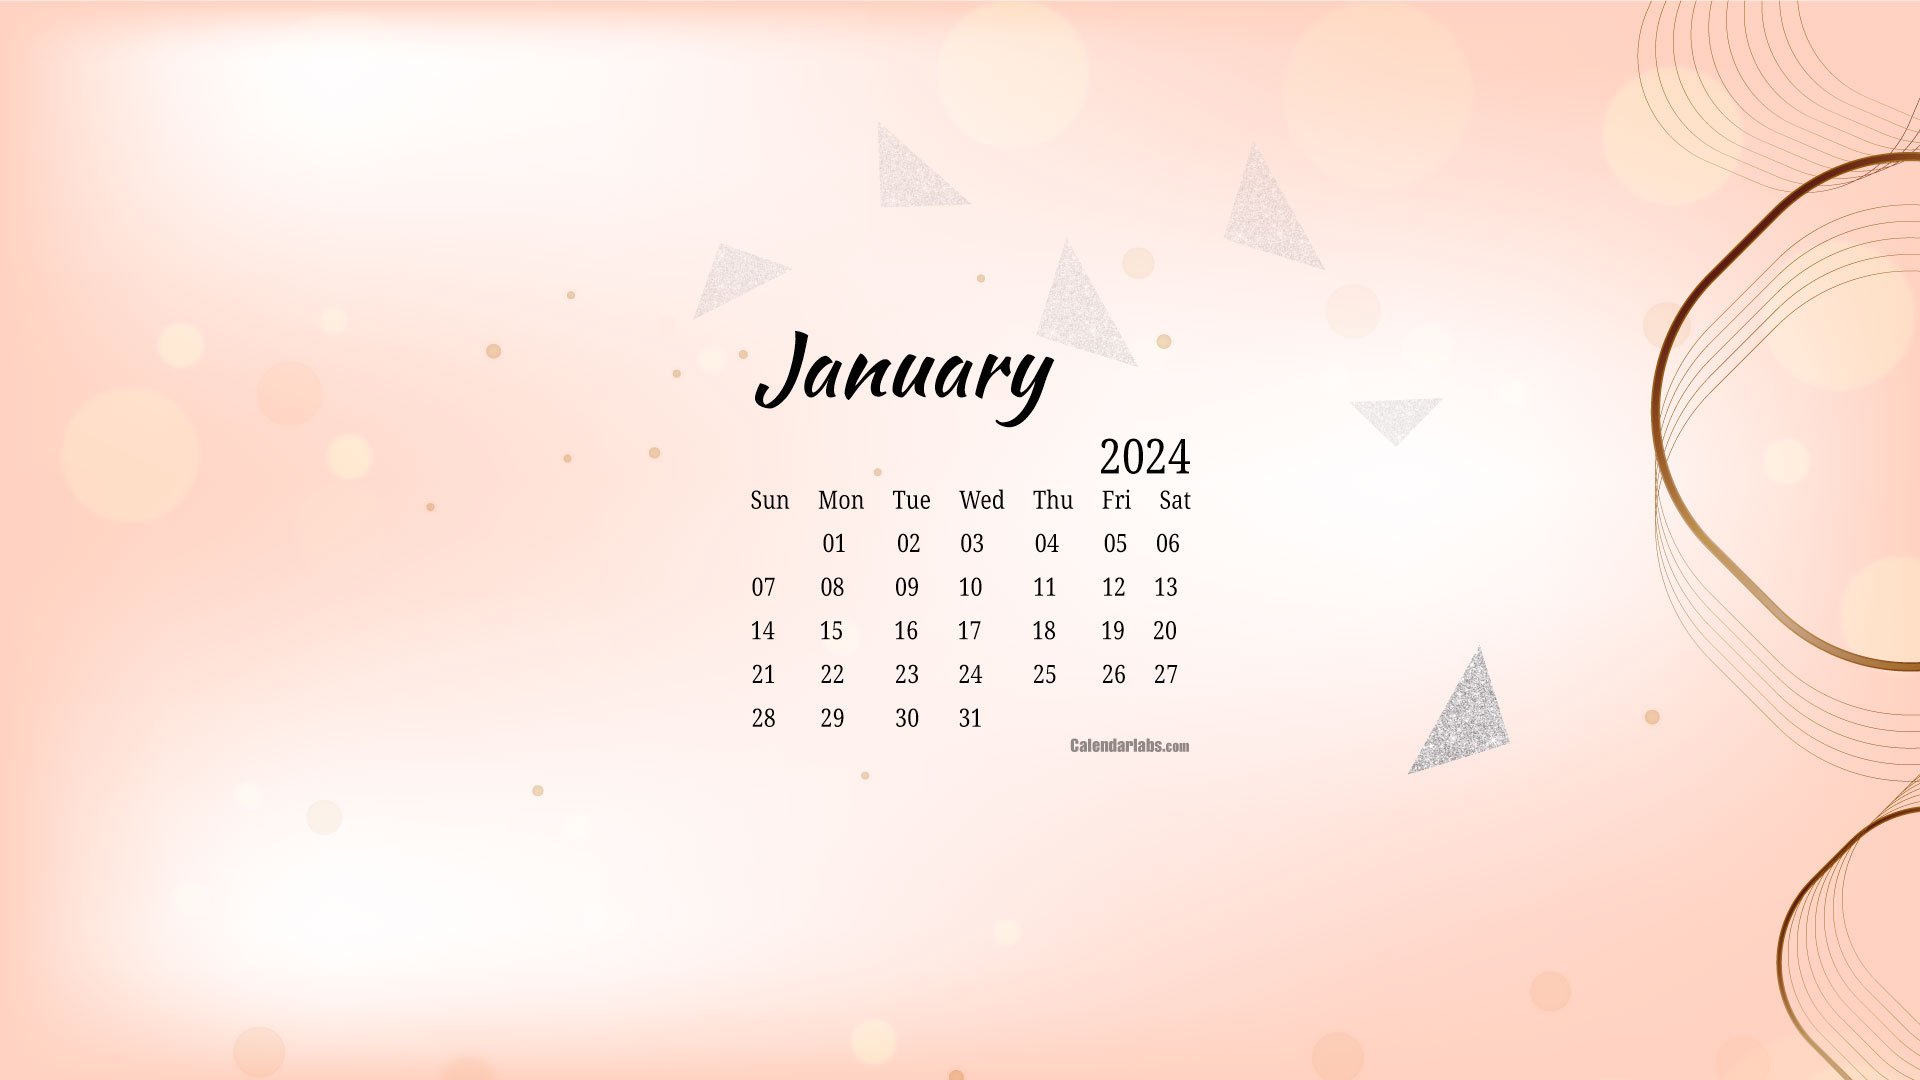 January 2024 Desktop Wallpaper Calendar